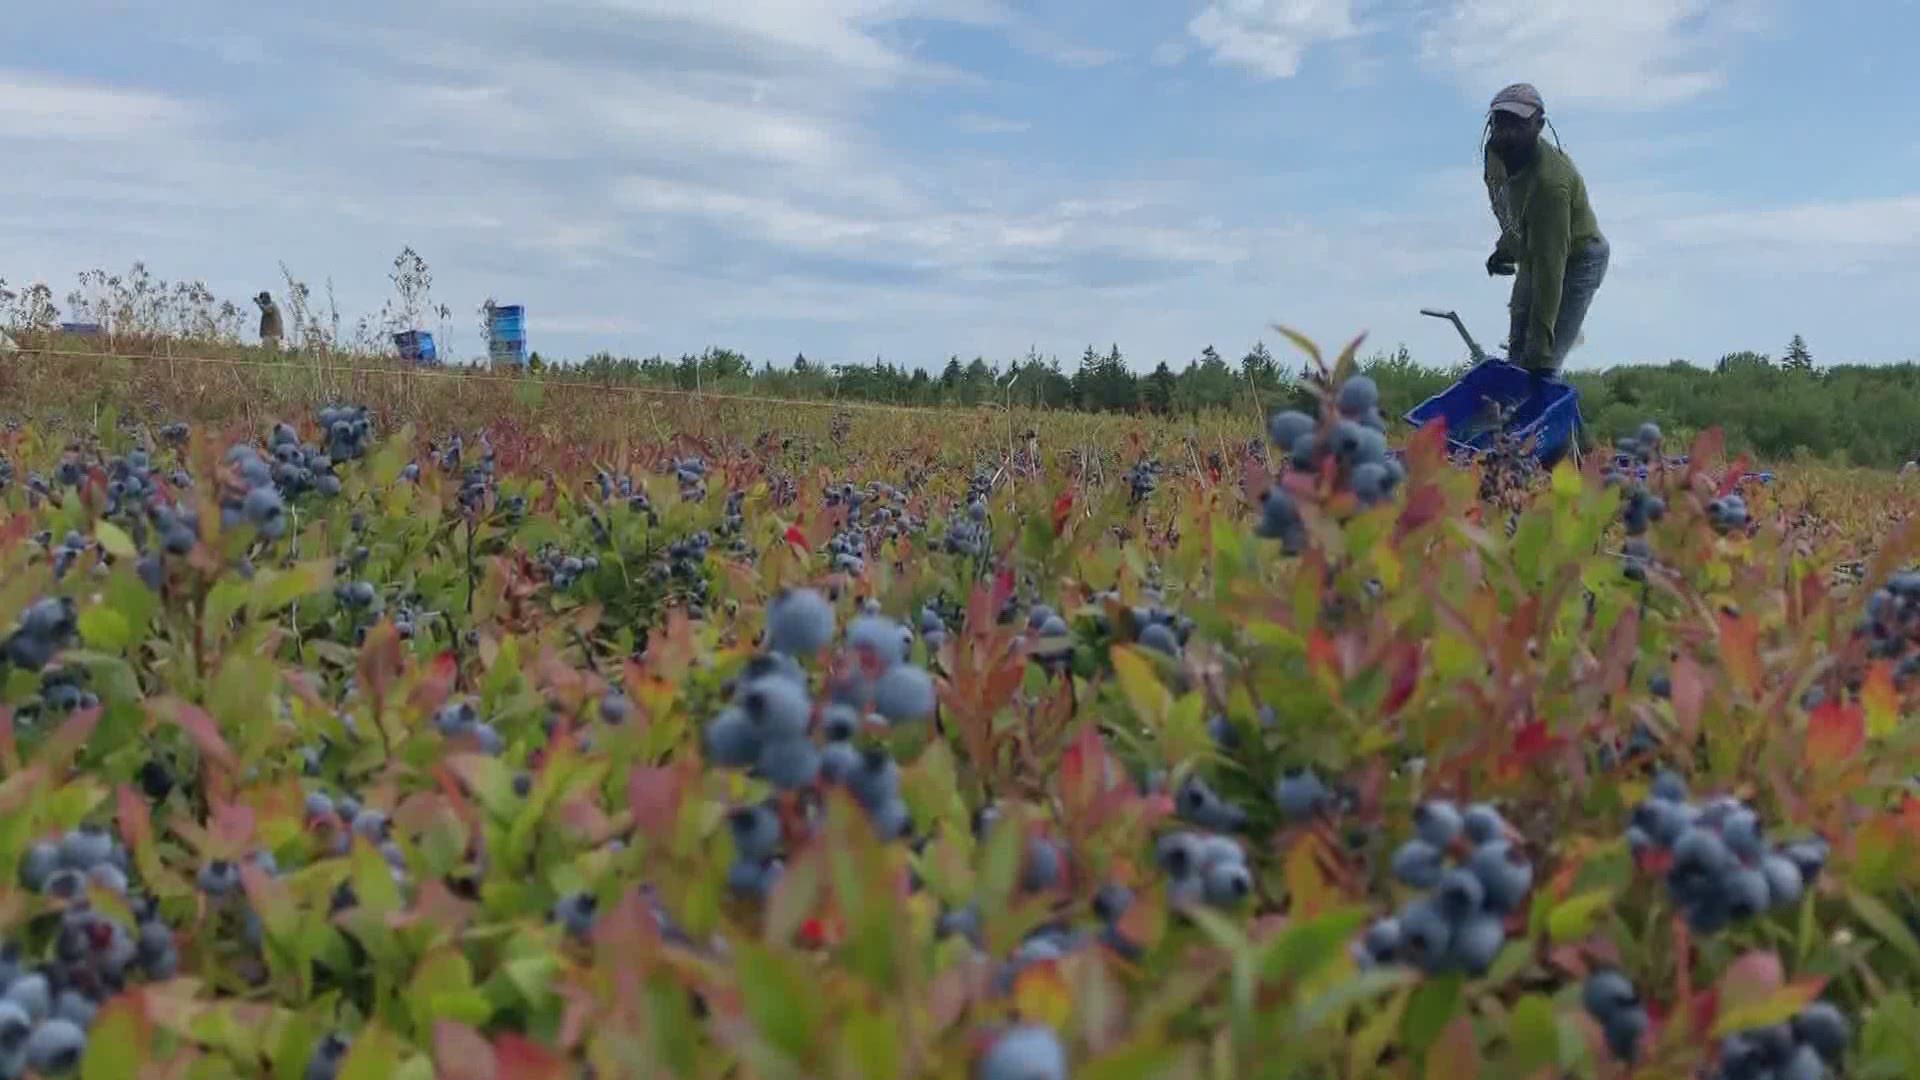 Maine blueberry growers face hardships amid the coronavirus pandemic